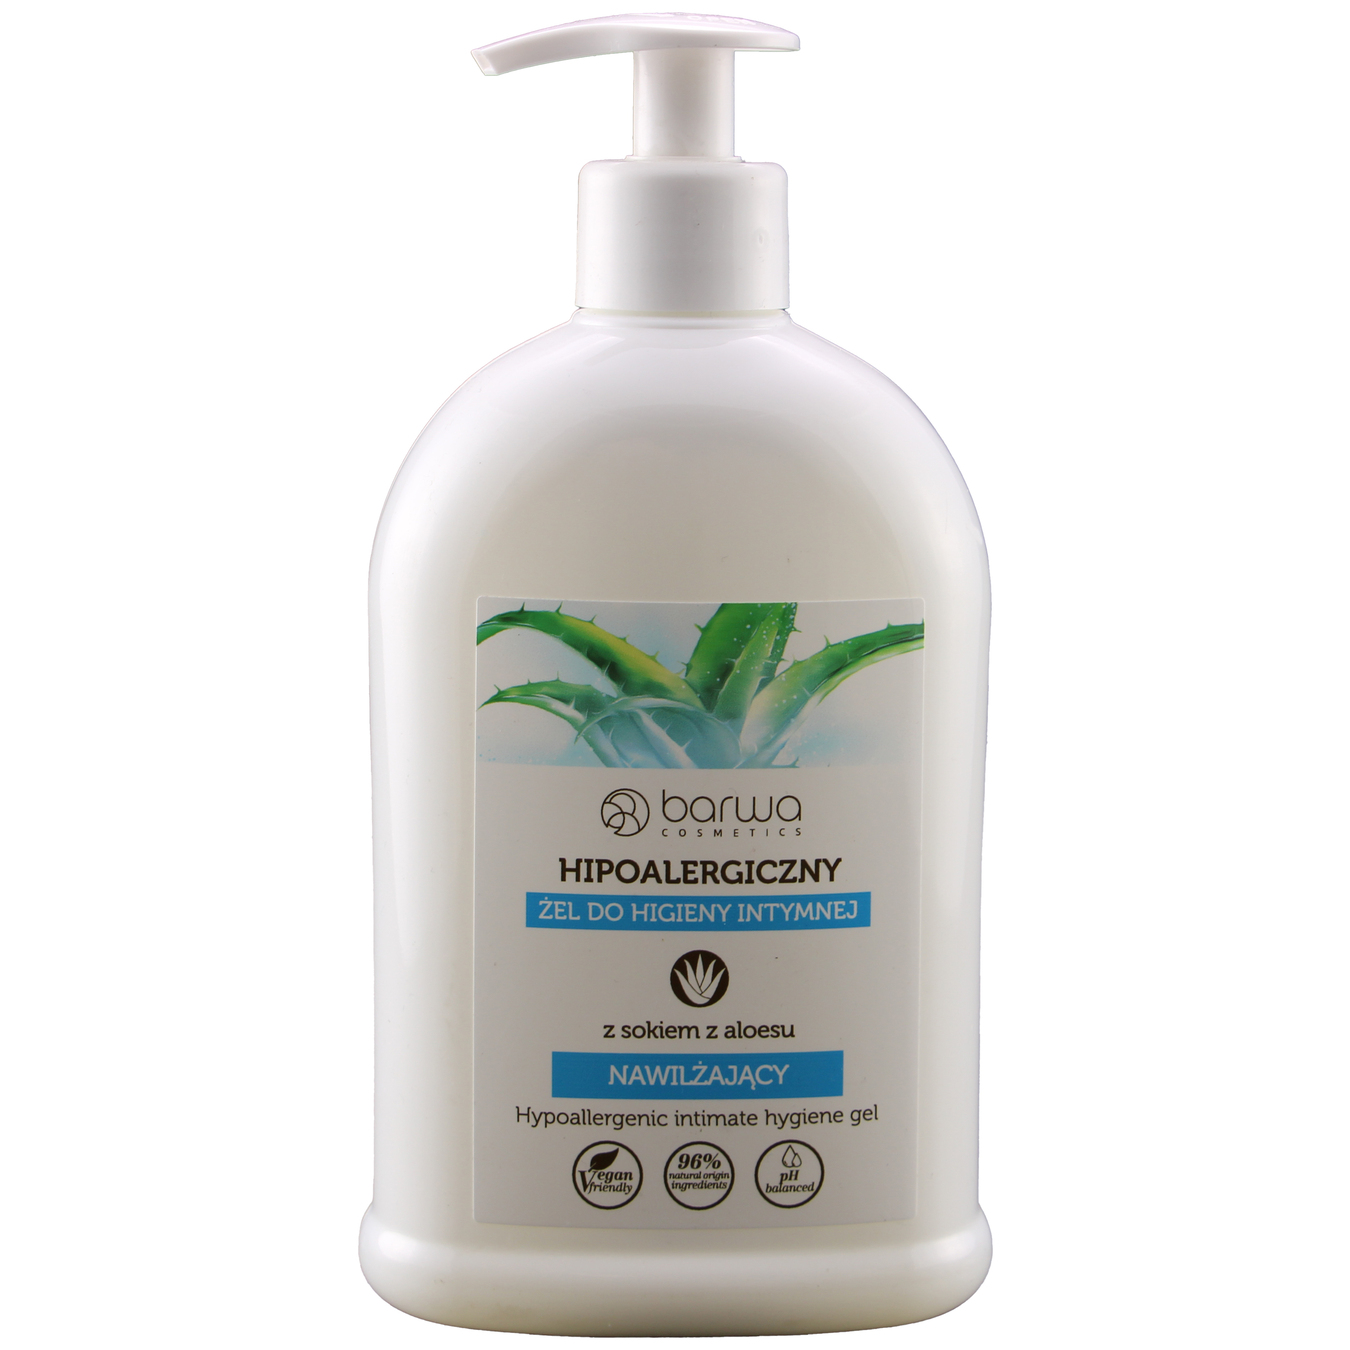 Barwa gel for intimate hygiene hypoallergenic with aloe vera juice 500ml